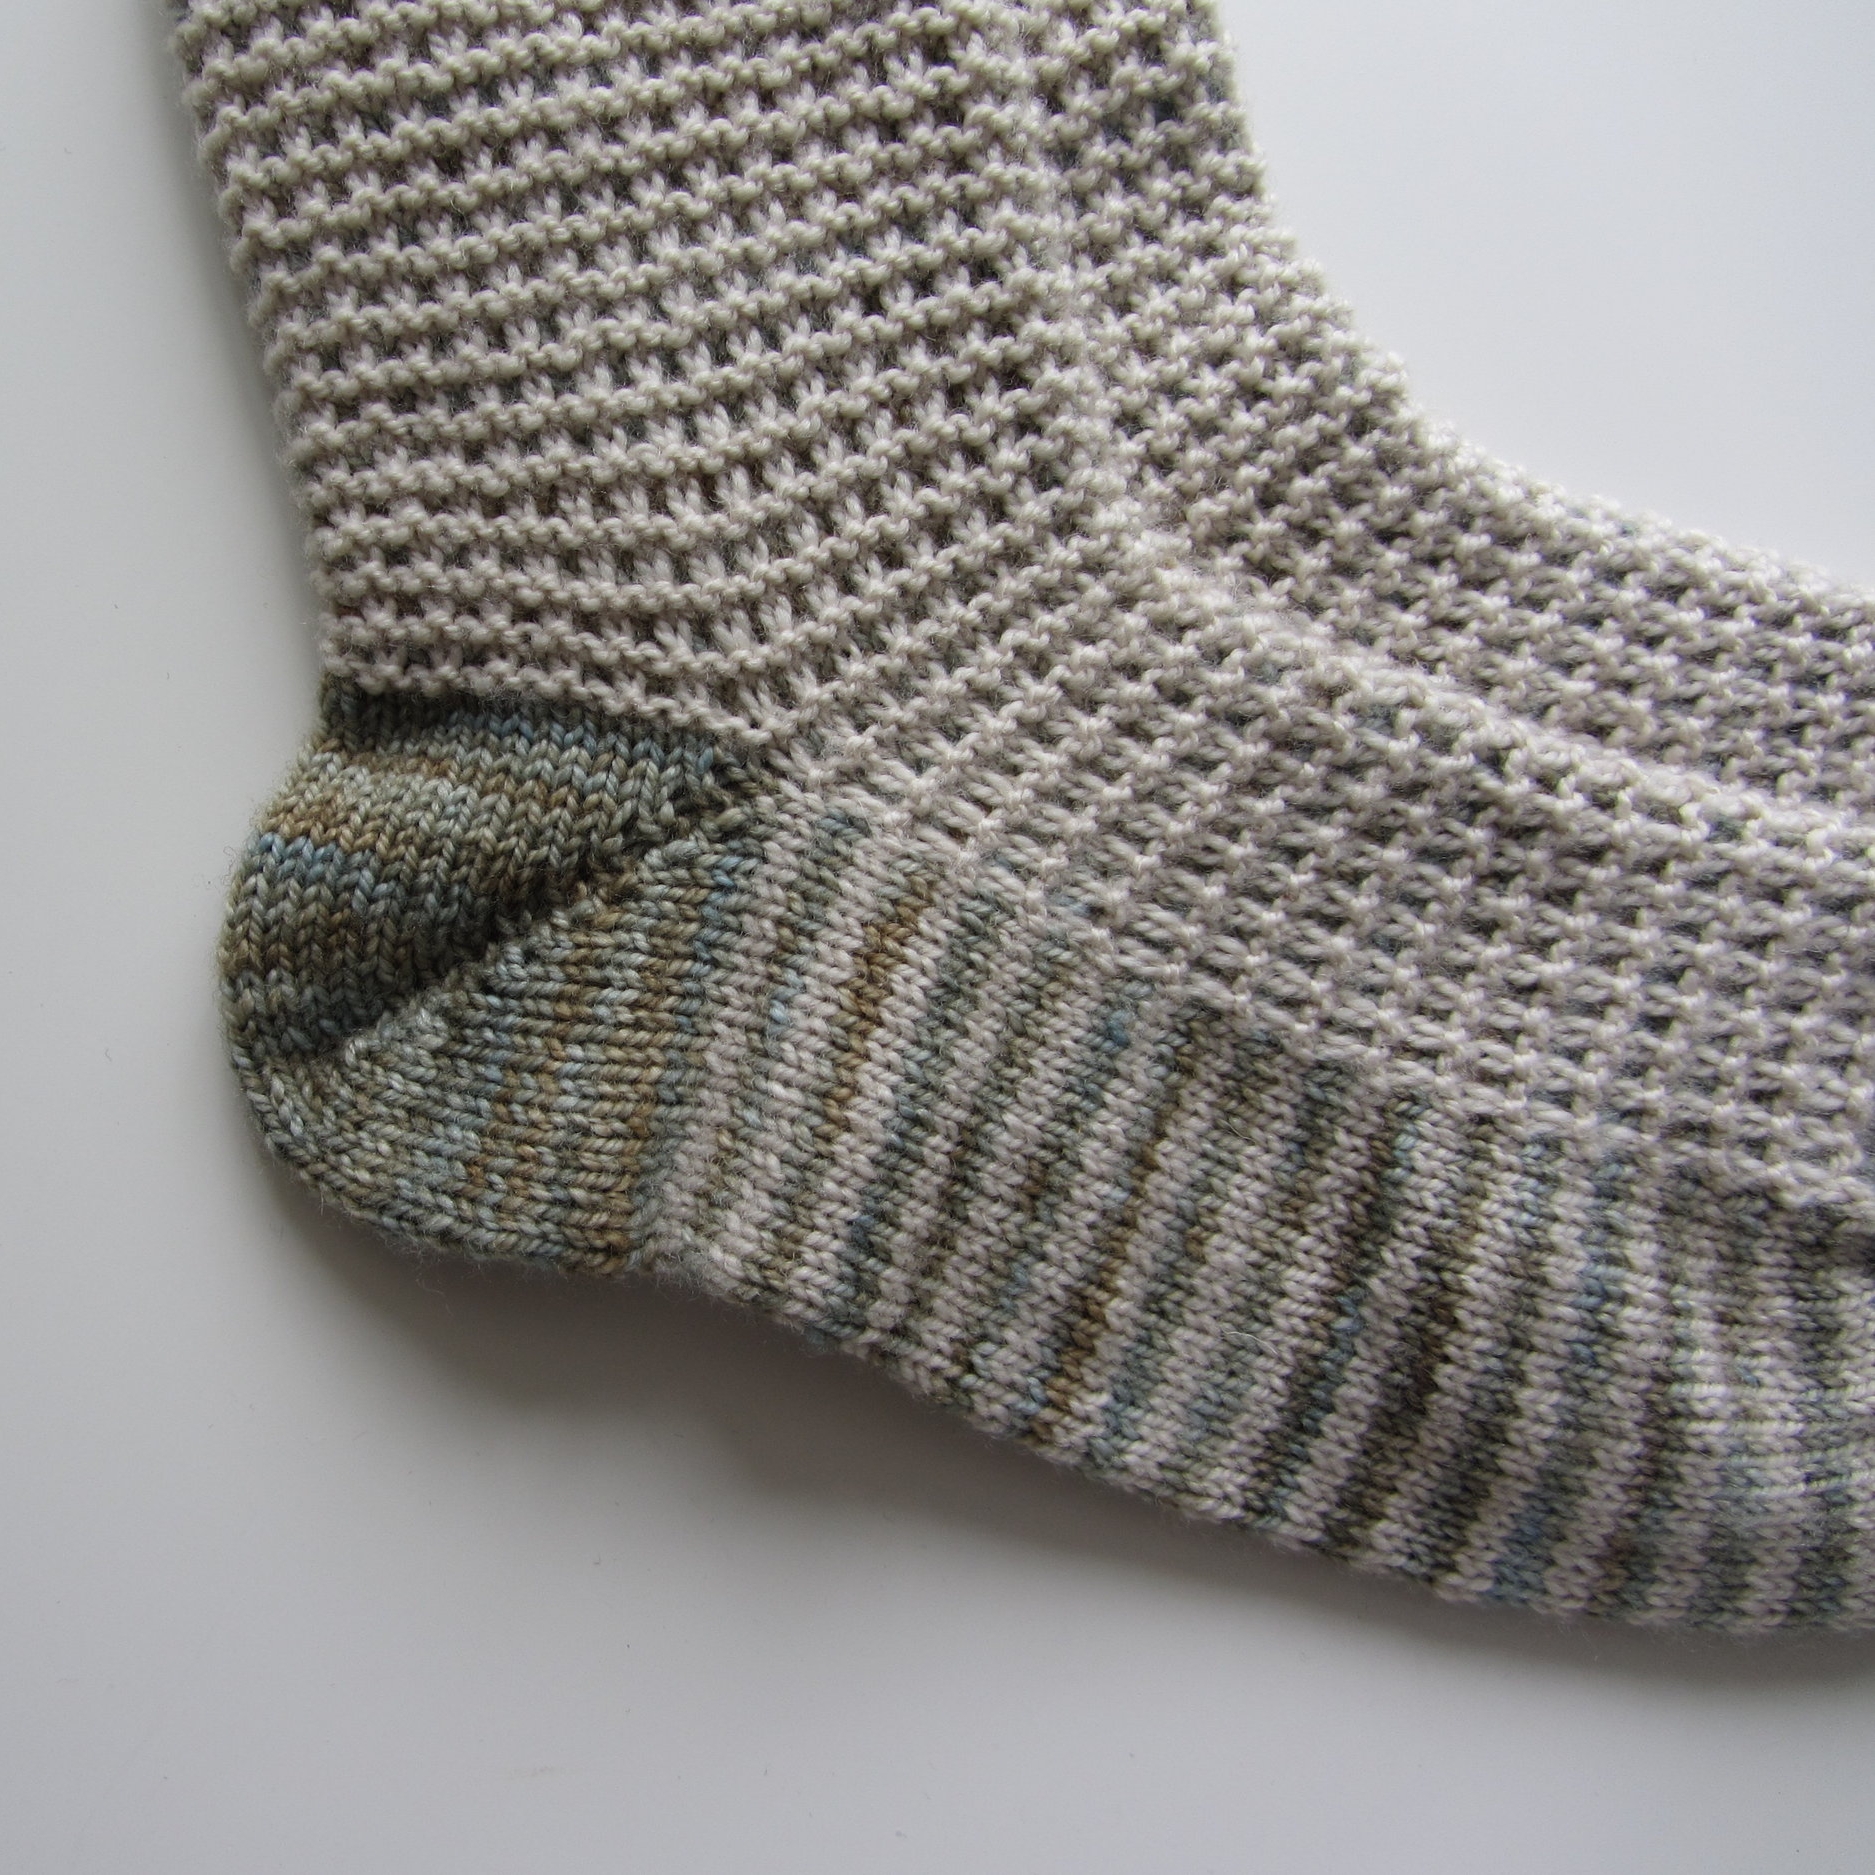 knitting heel